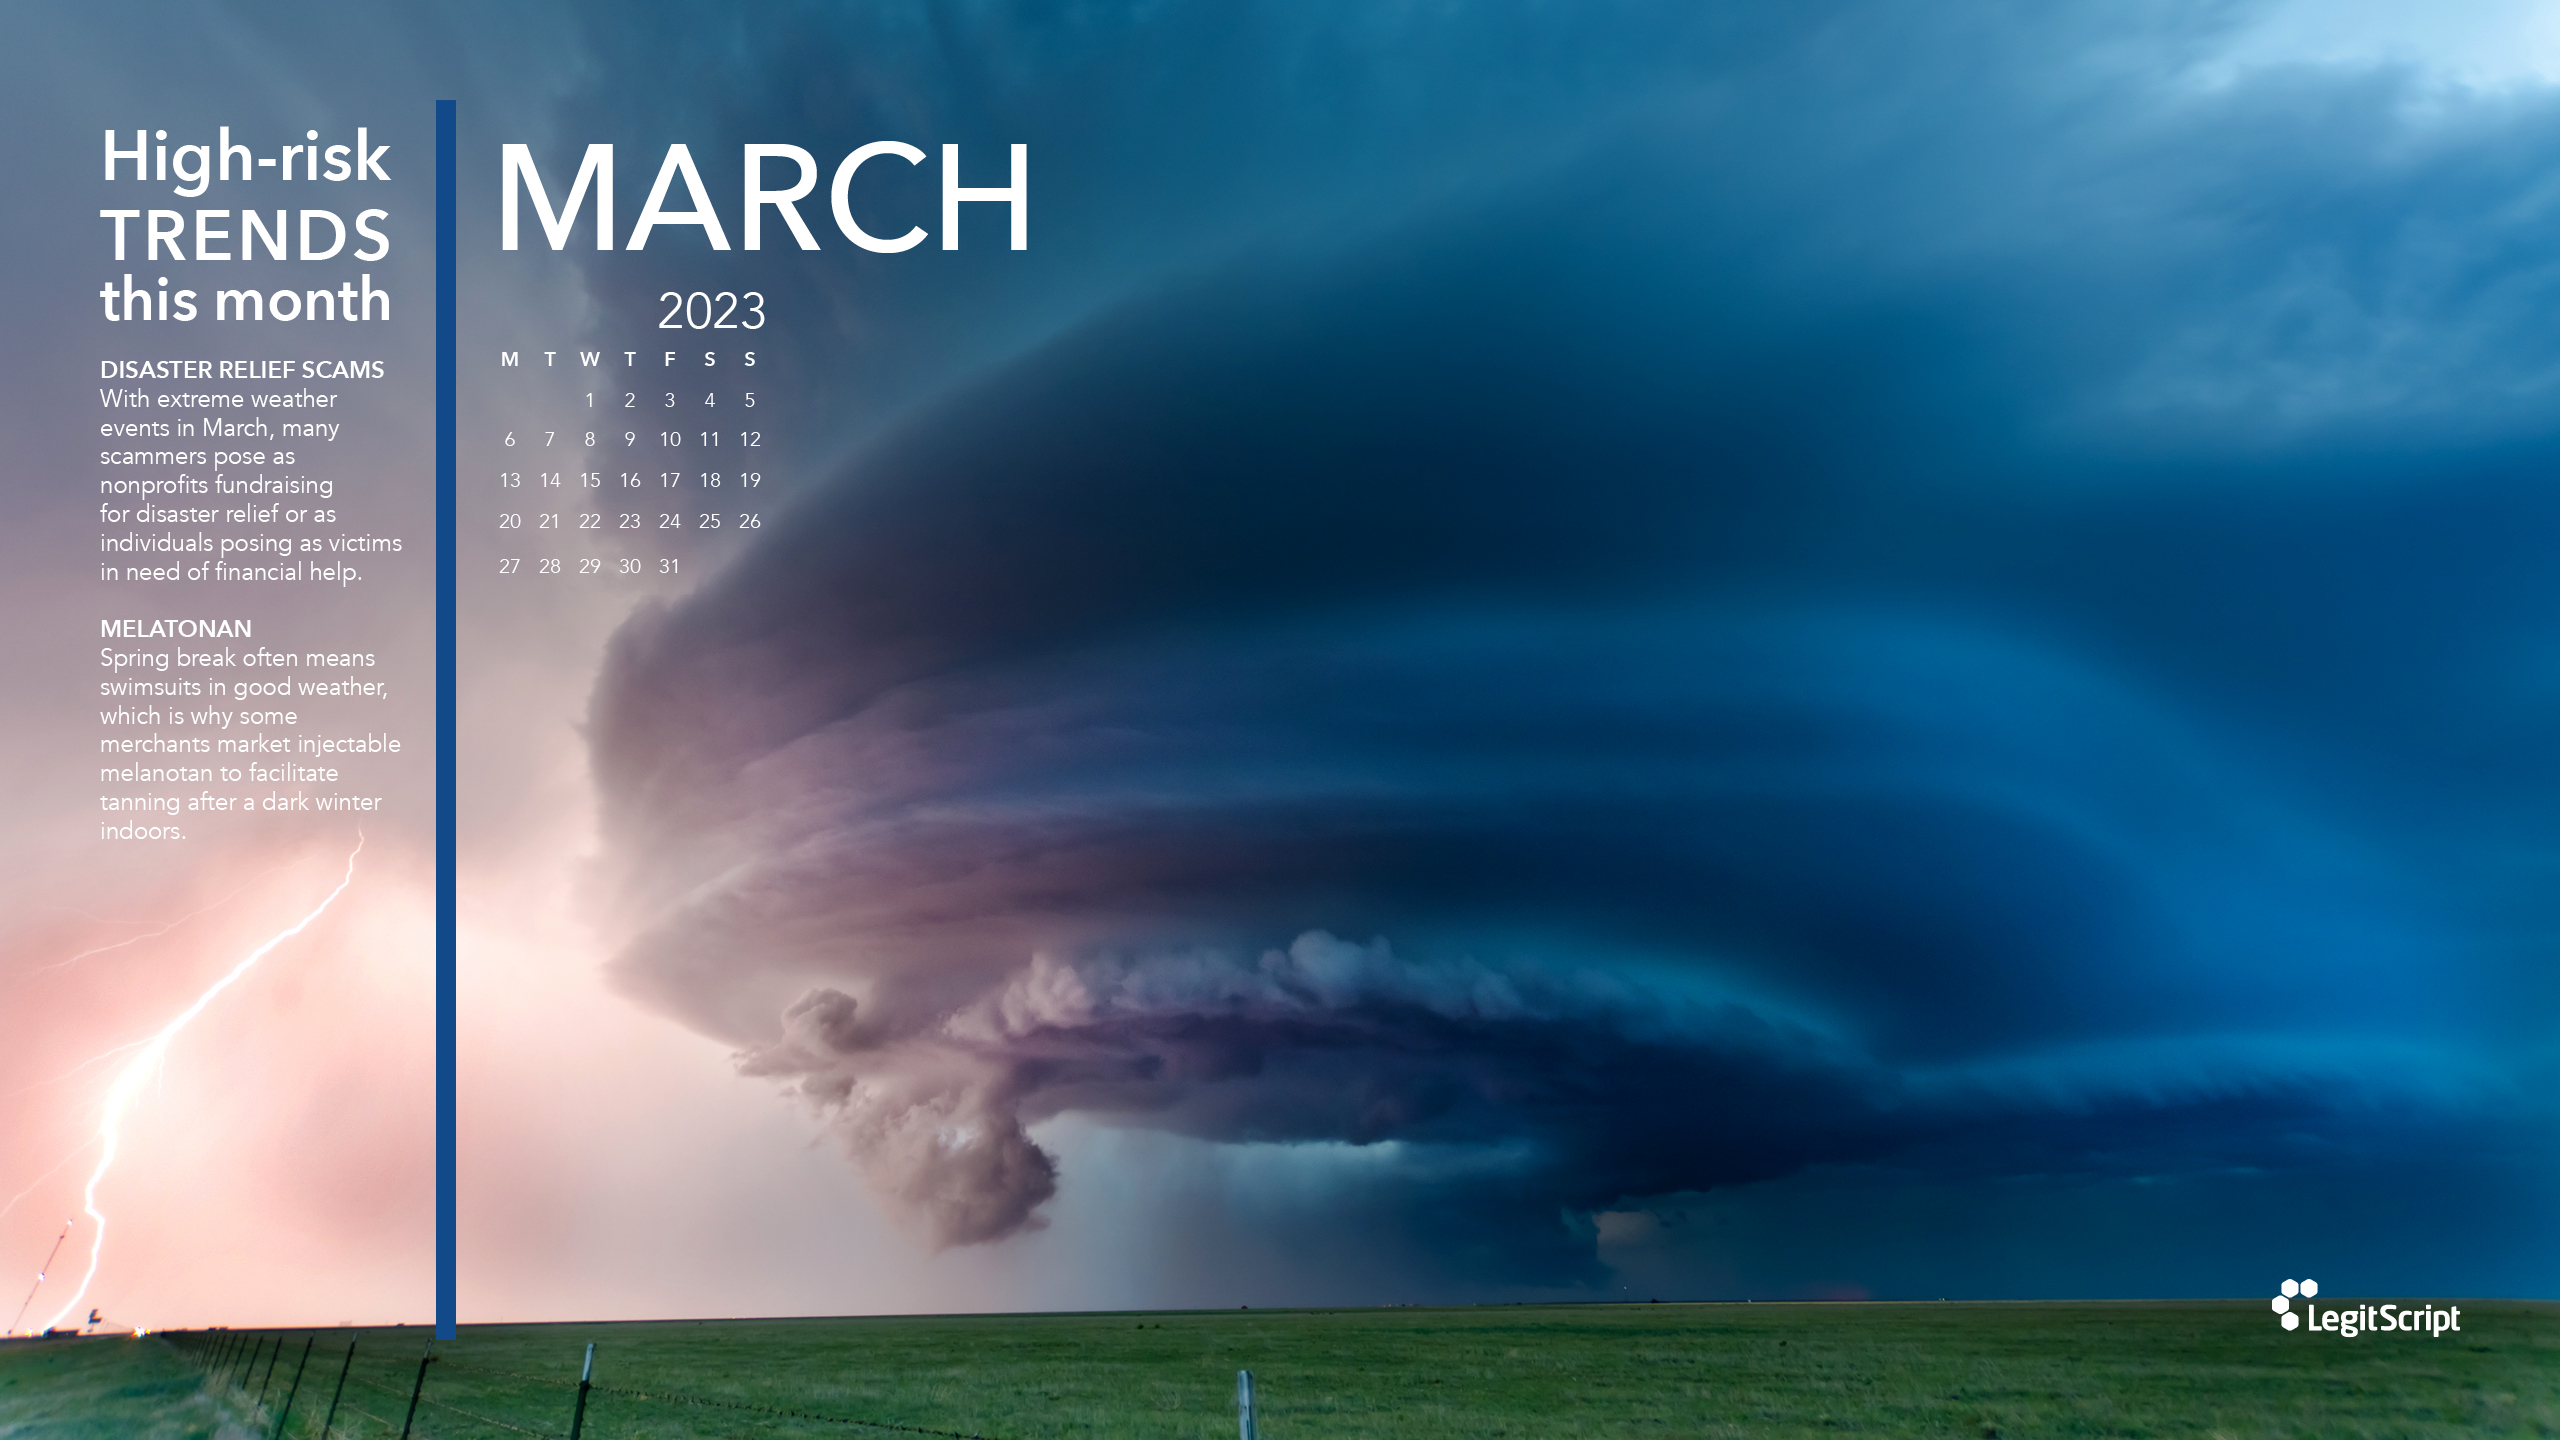 Seasonal High Risk Trends desktop background for March.